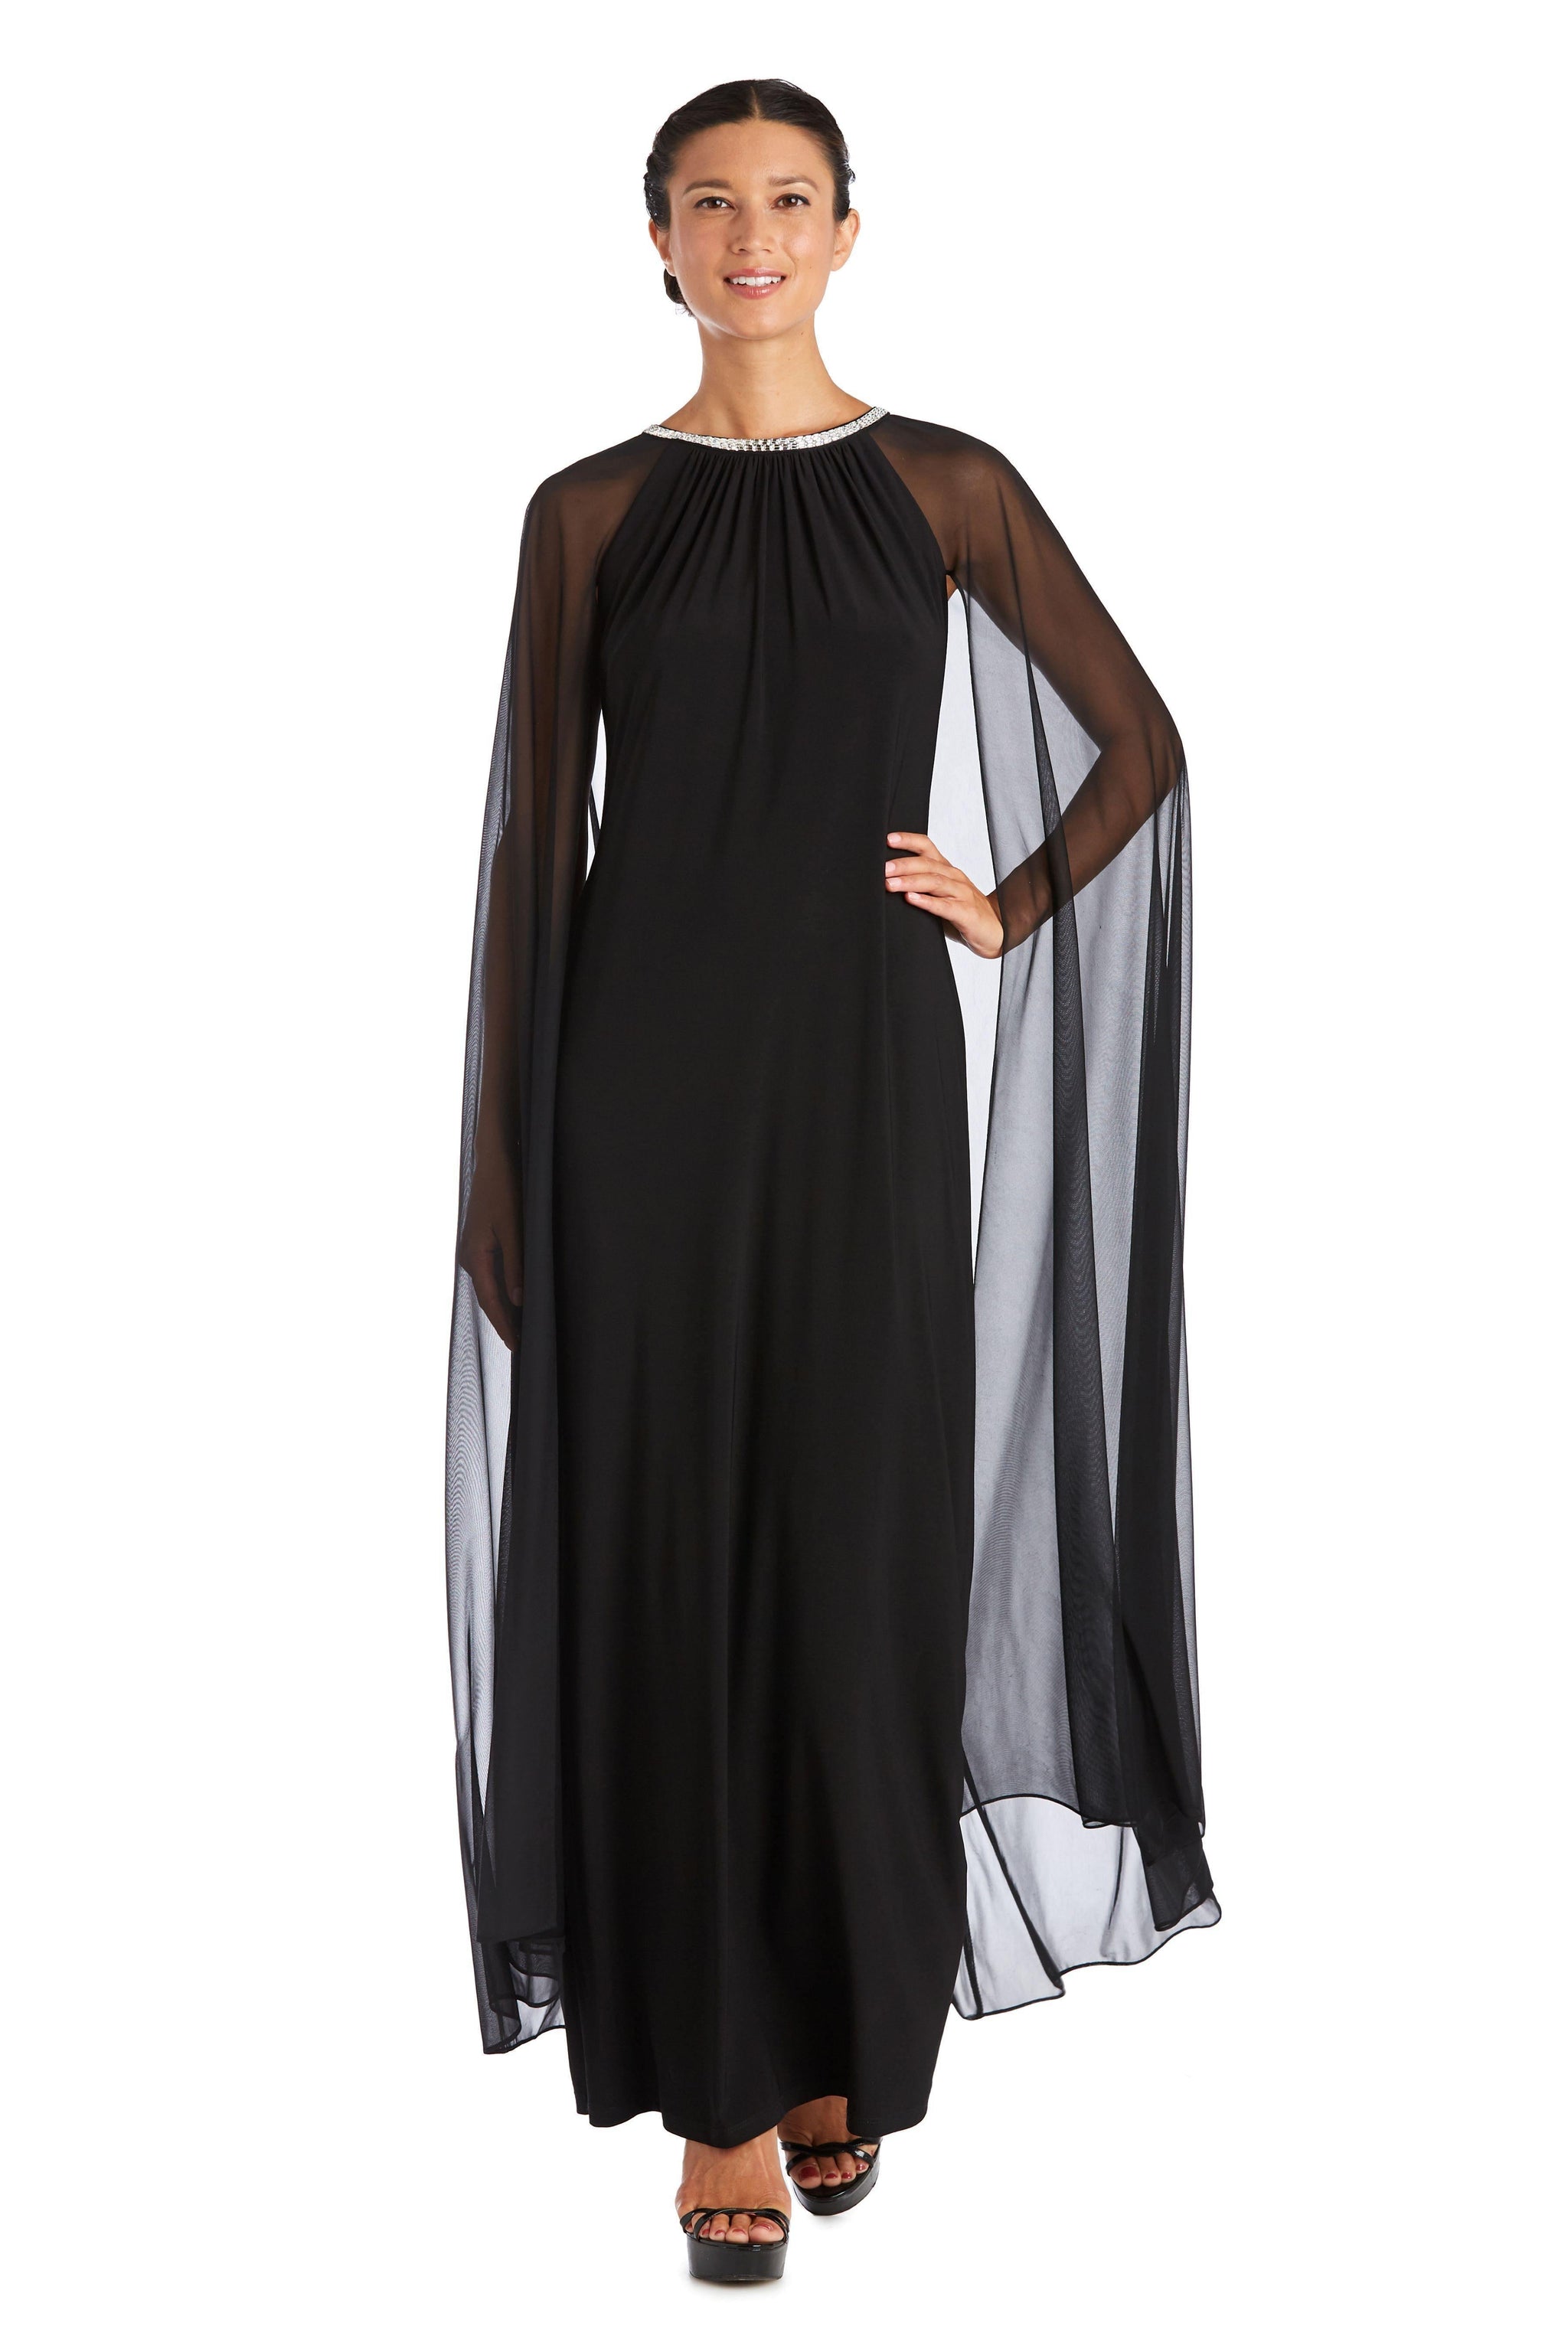 Black R&M Richards 2487 Long Mother Of The Bride Dress Sale for $35.99 ...